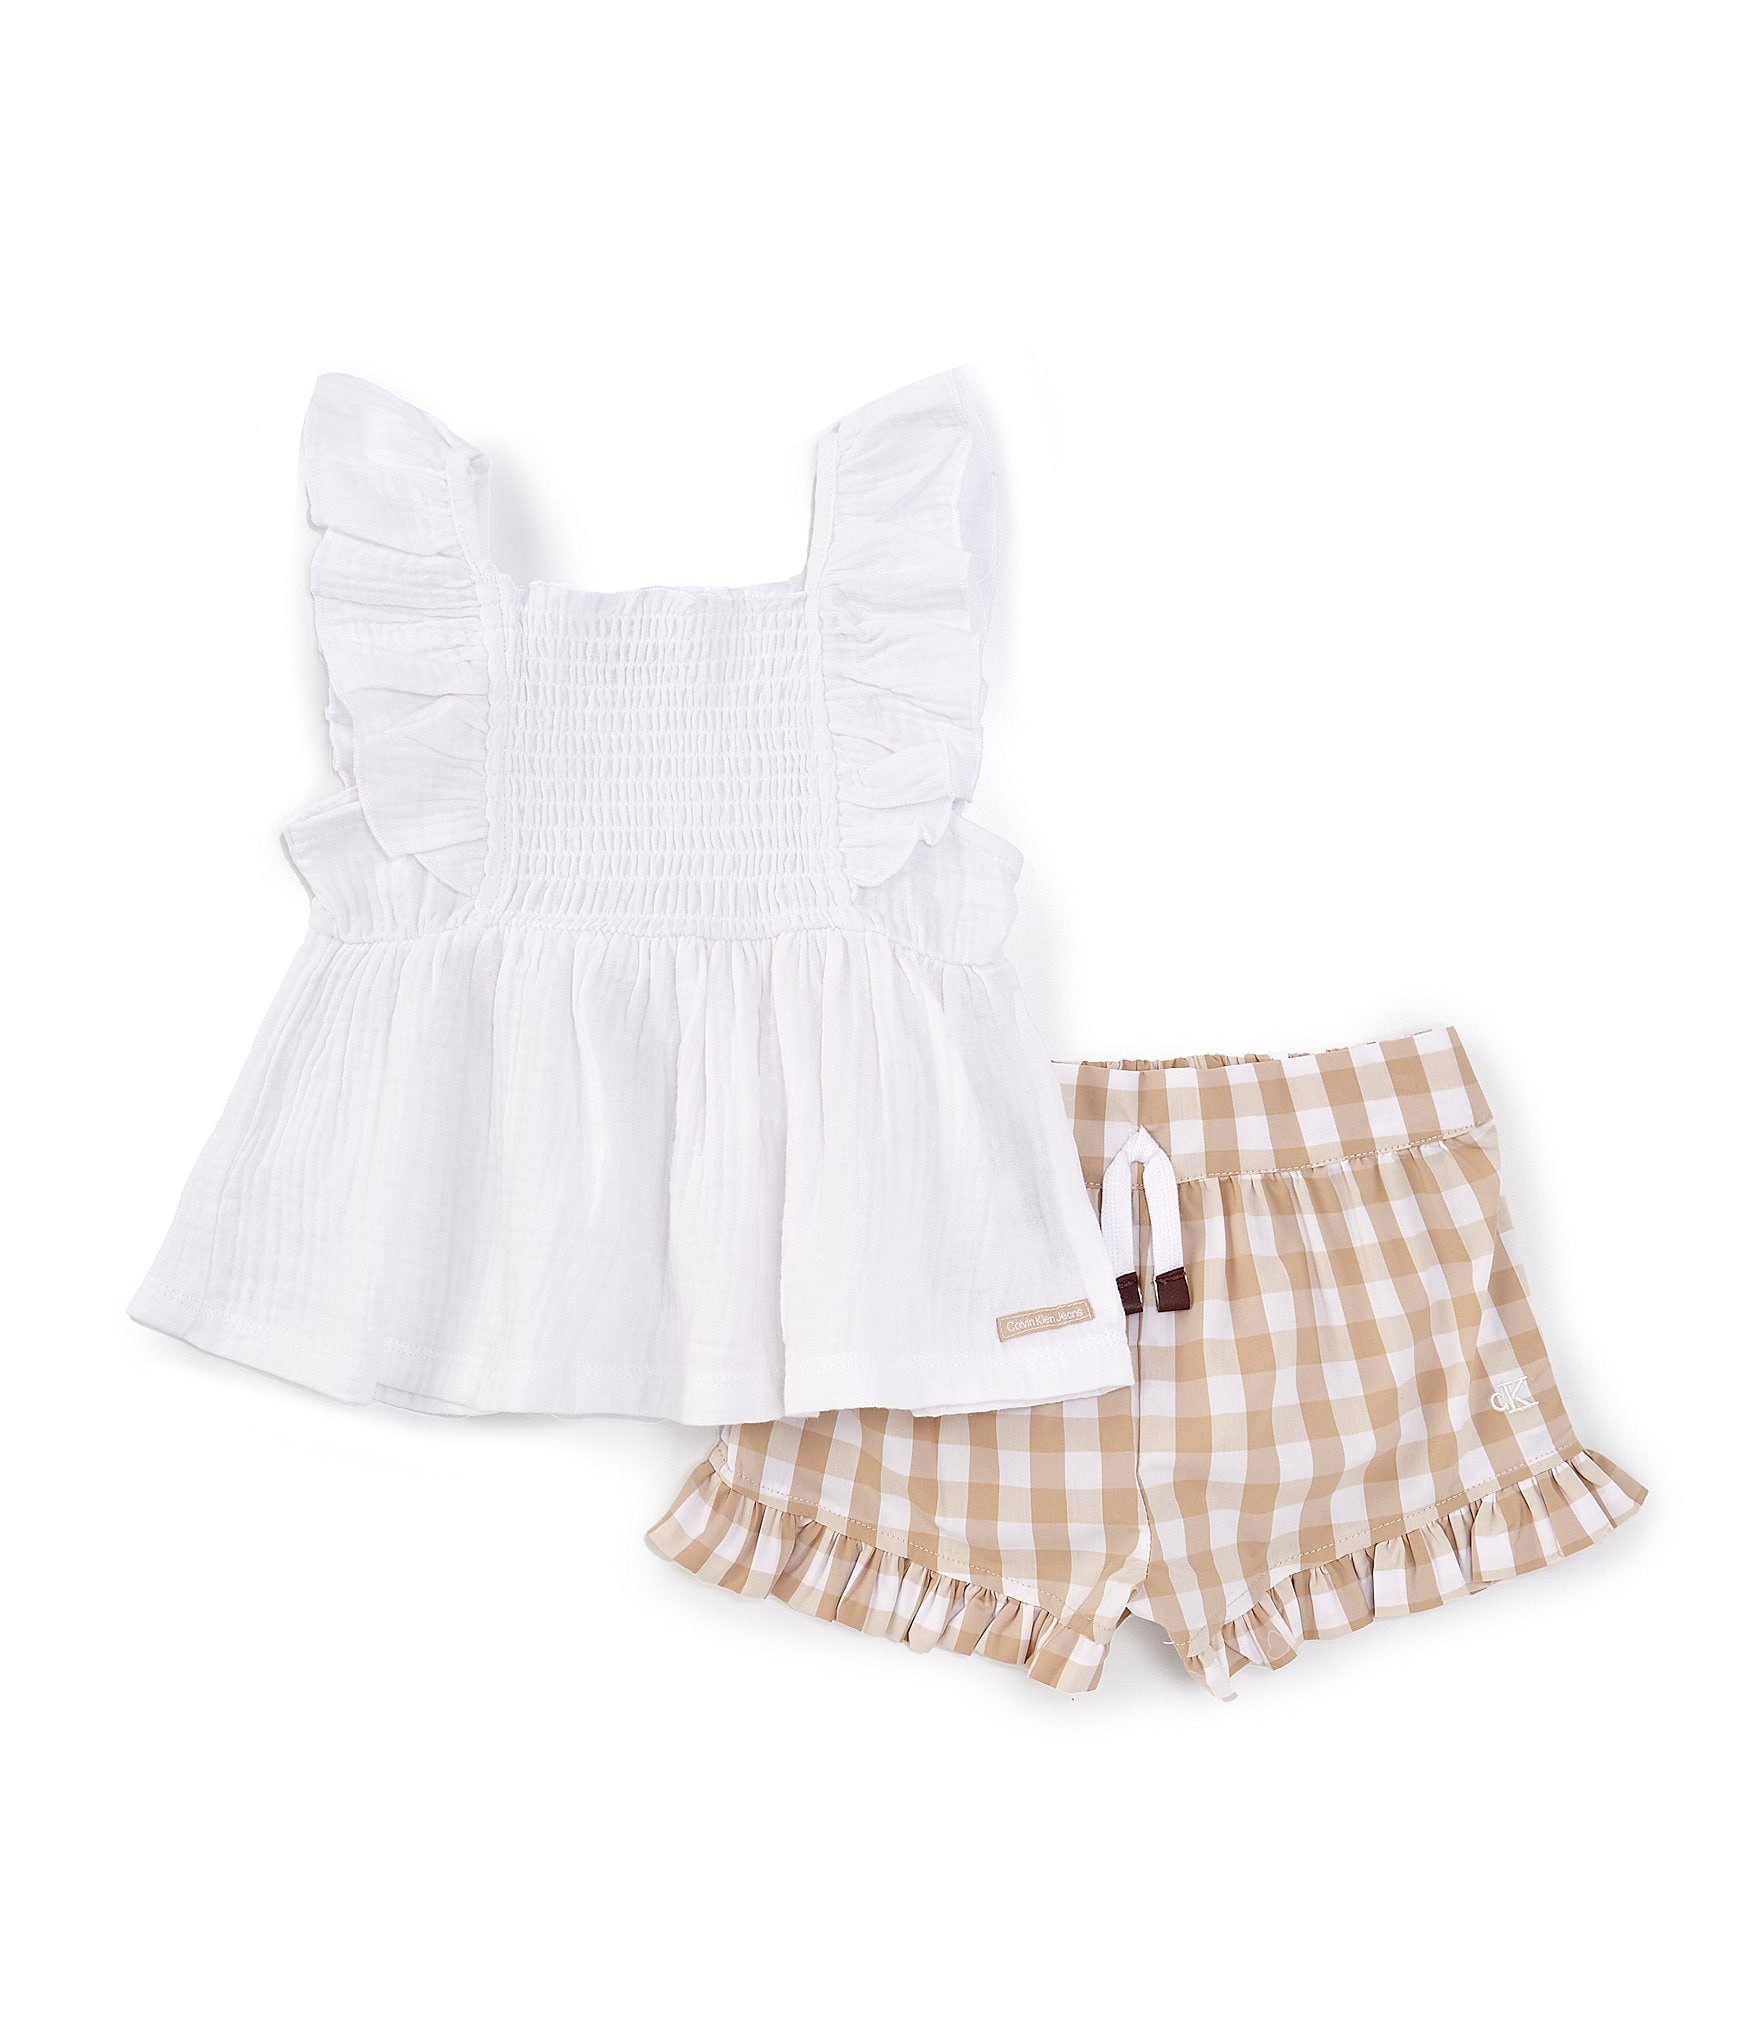 Calvin Klein Girls 2 Pack Bikini Modern Cotton - Kids Life Clothing -  Children's designer clothing